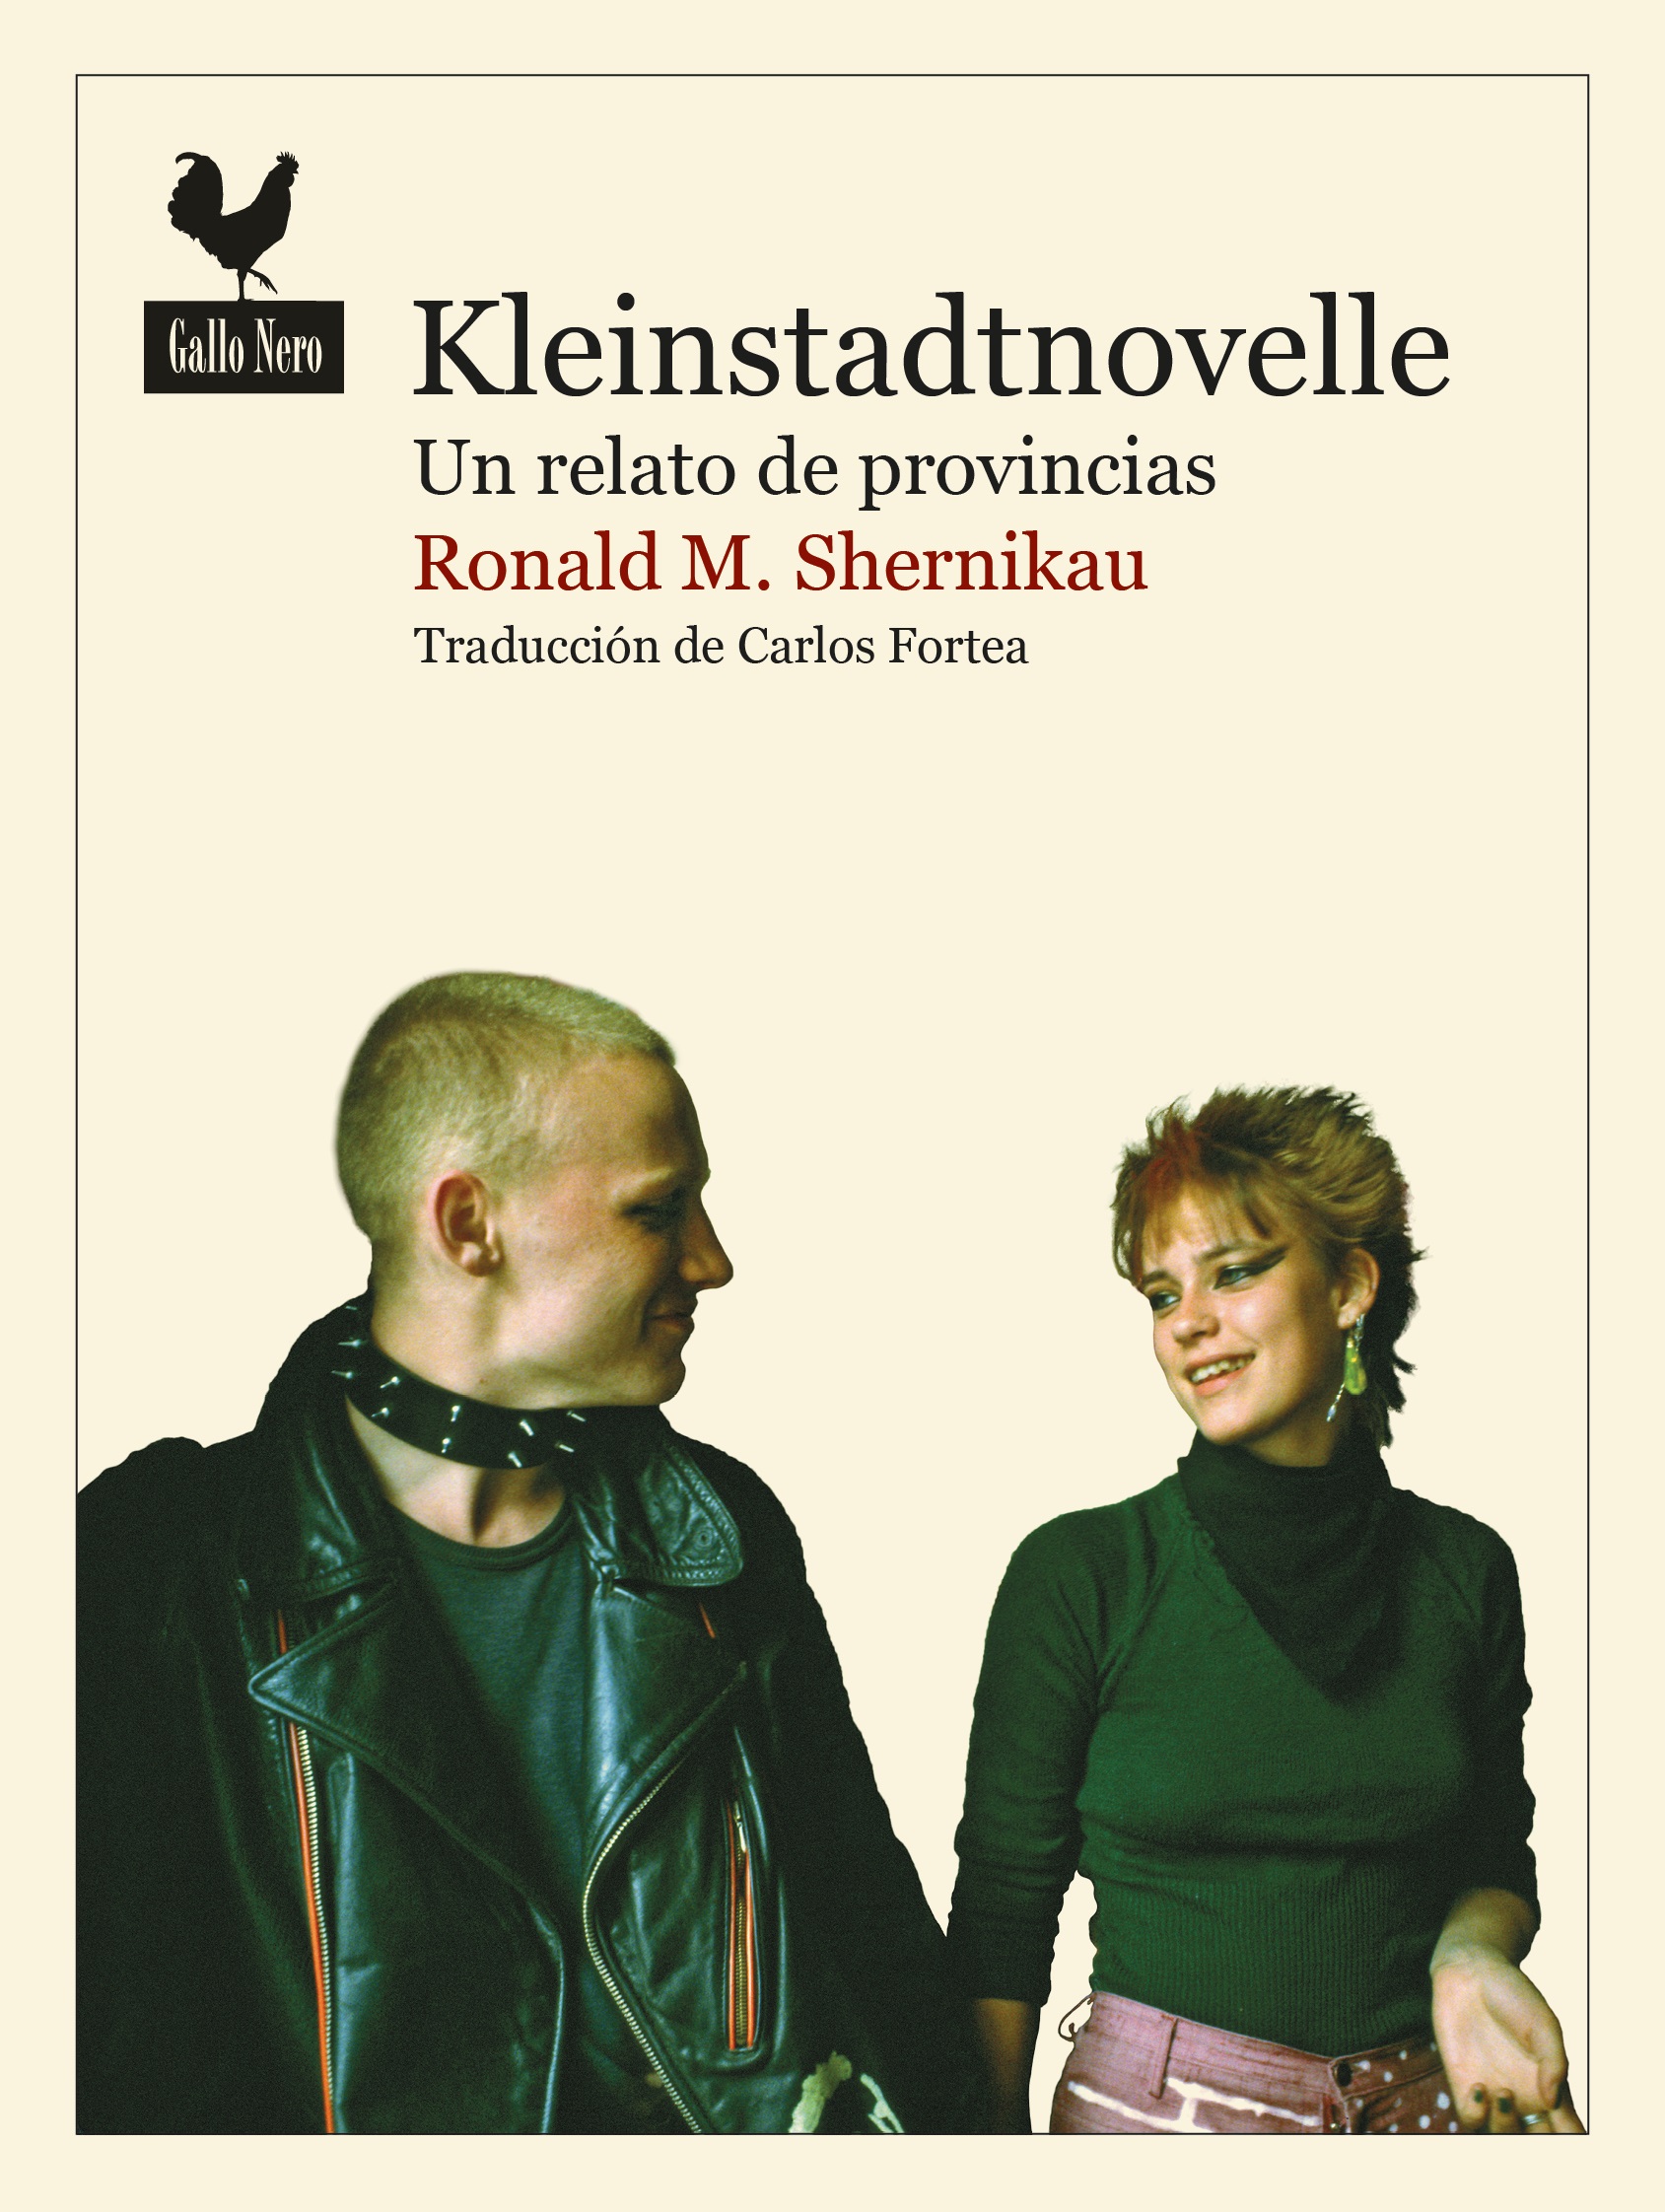 Portada del libro «Kleinstadtnovelle», de Ronald M. Schernikau